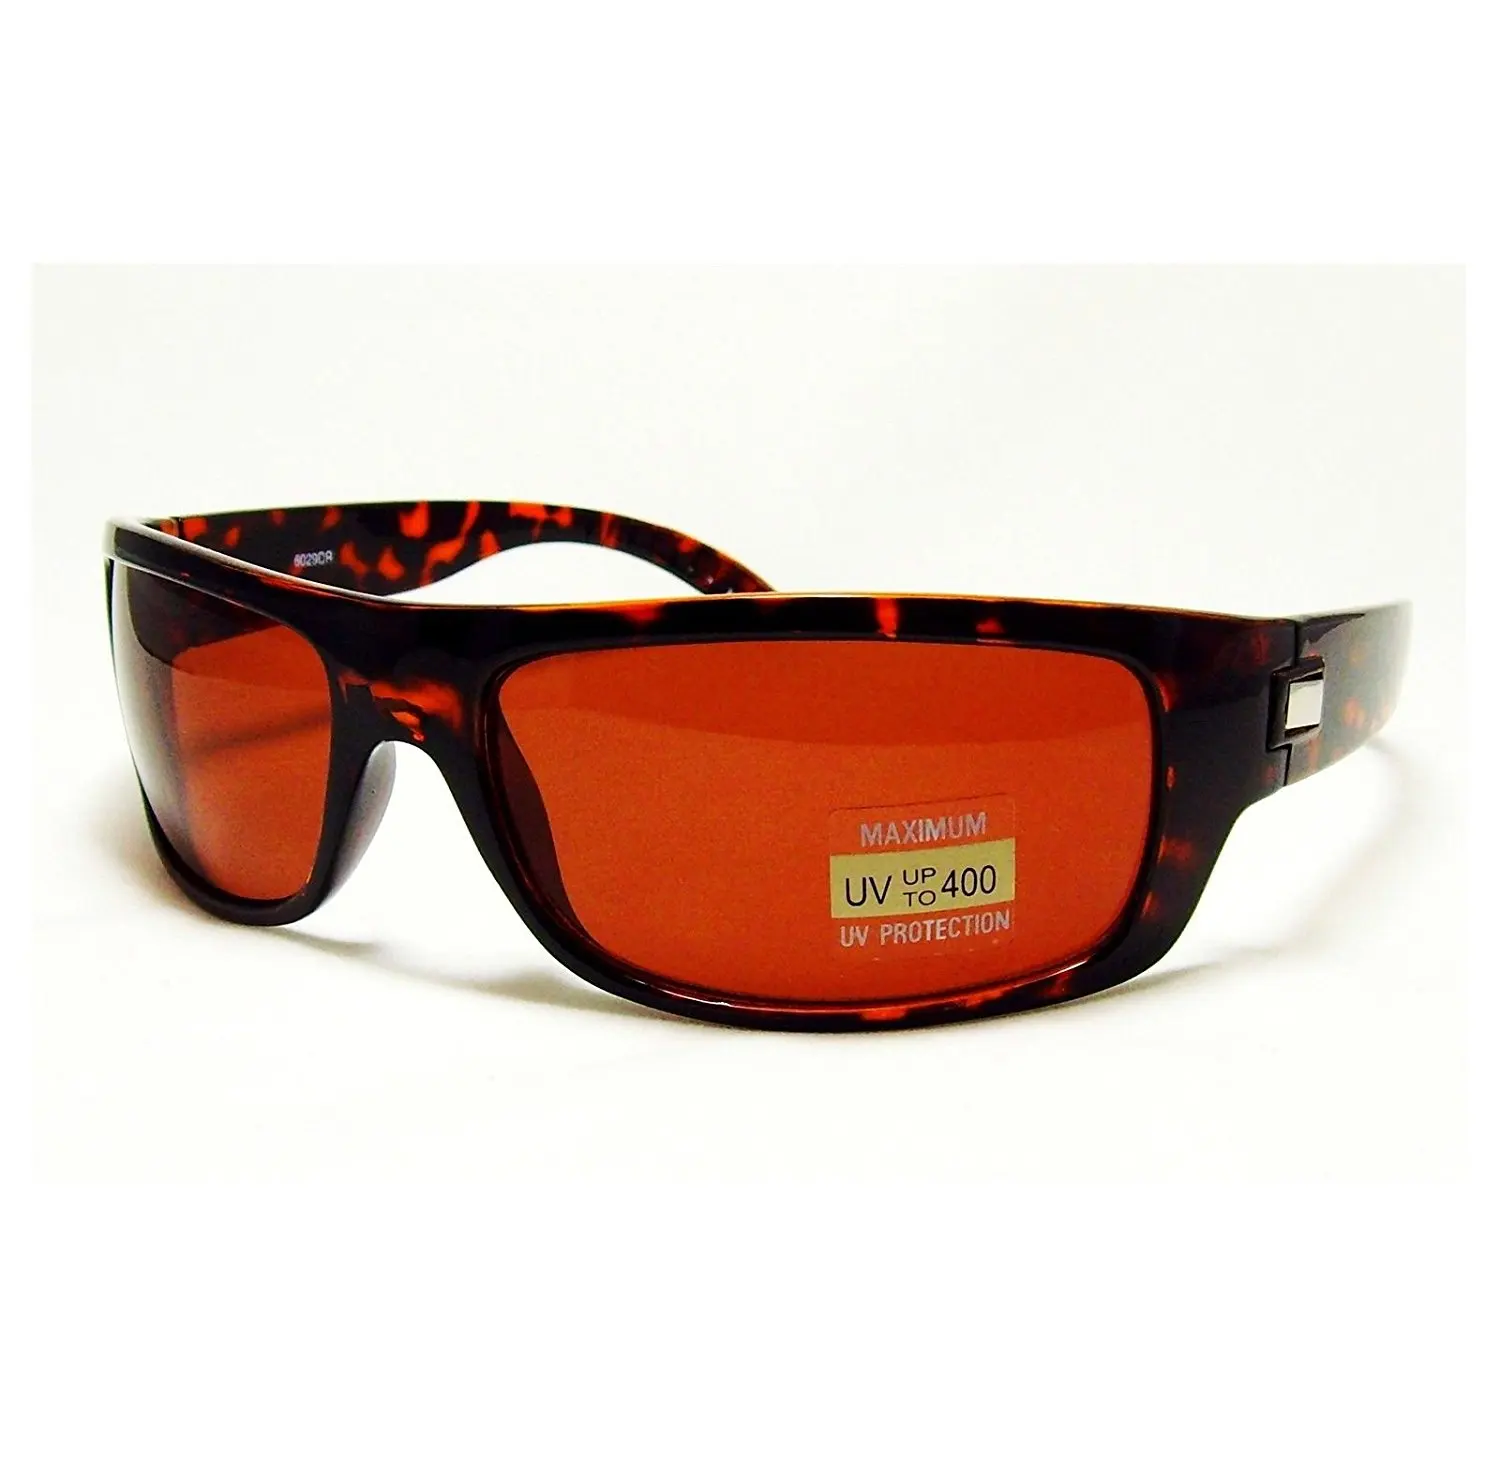 Cheap Hd Vision Wraparound Sunglasses Find Hd Vision Wraparound